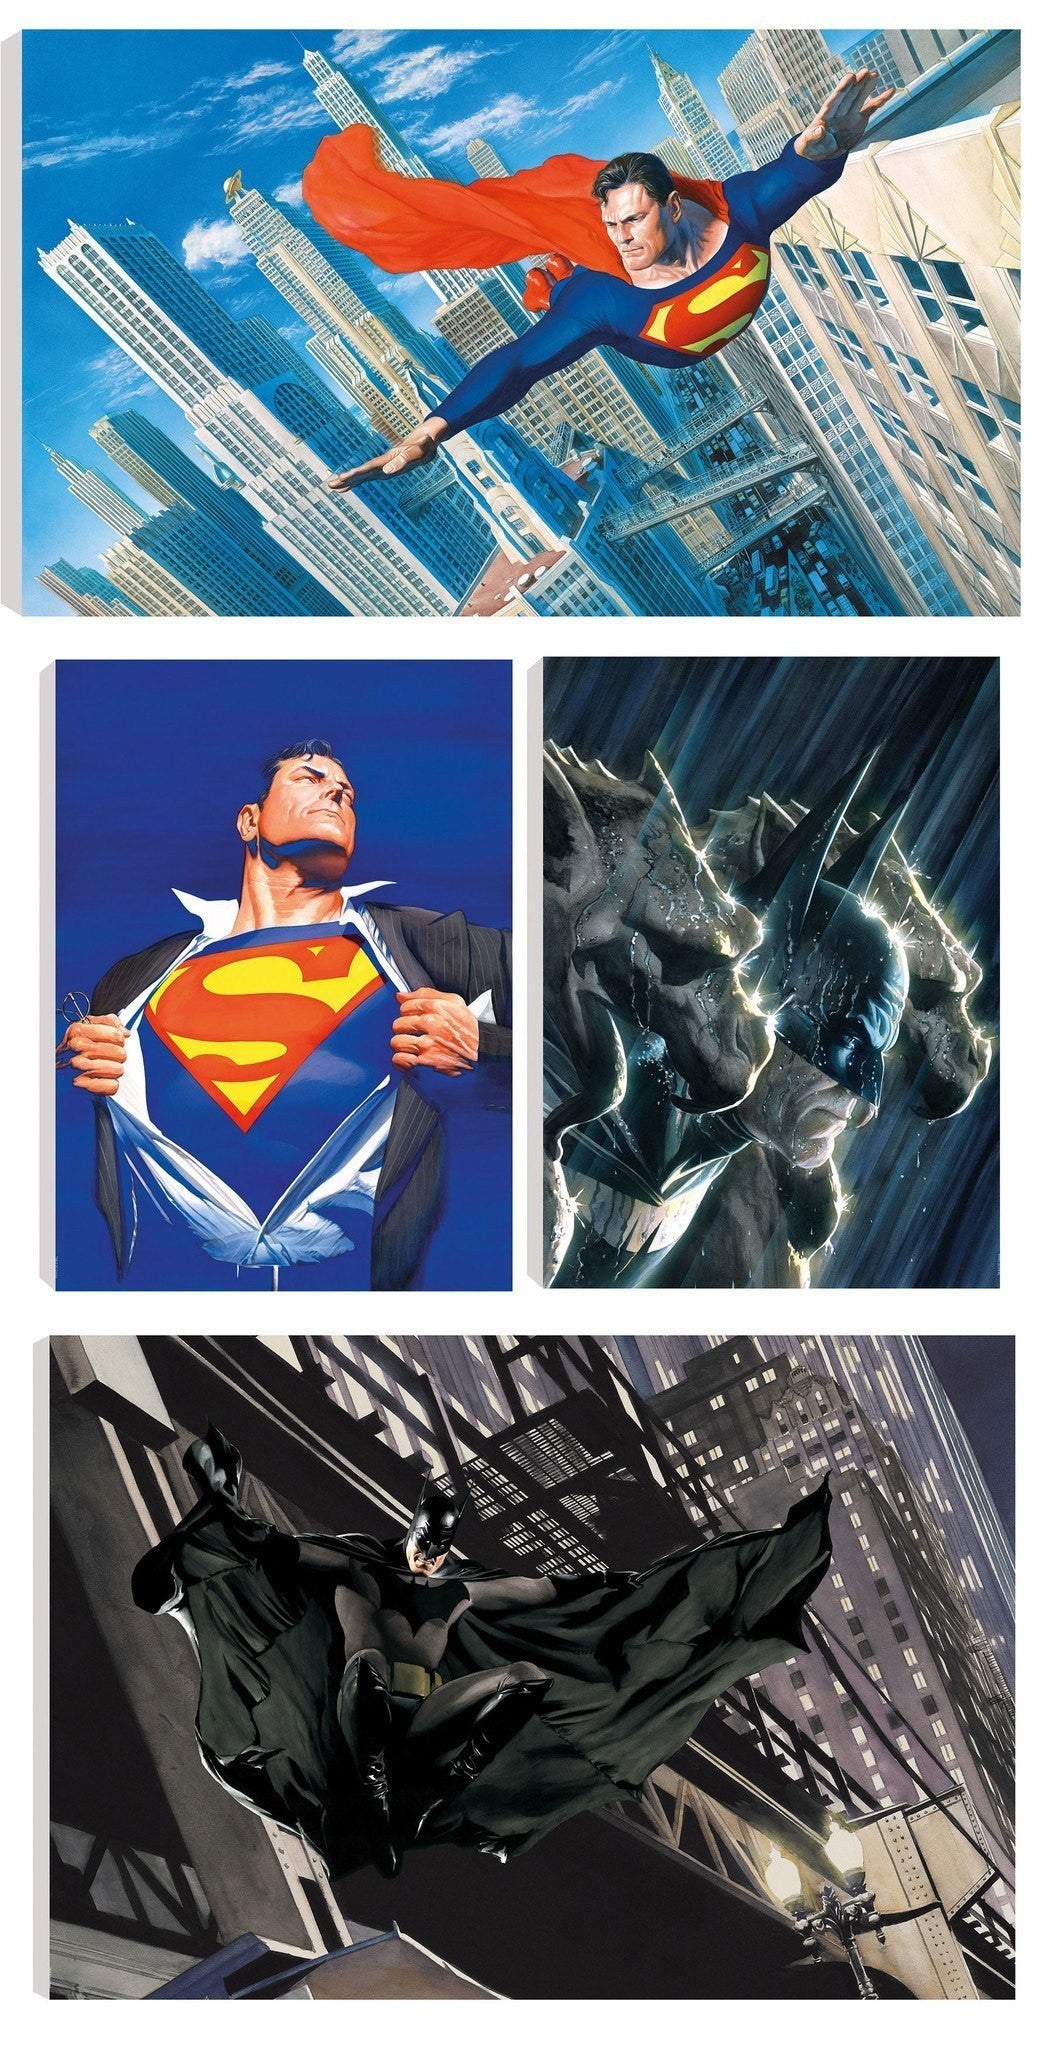 Portfolio of Four DC Comic Prints by Alex Ross - Canvas - SOLD OUT Alex Ross Portfolio of Four DC Comic Prints by Alex Ross - Canvas - SOLD OUT